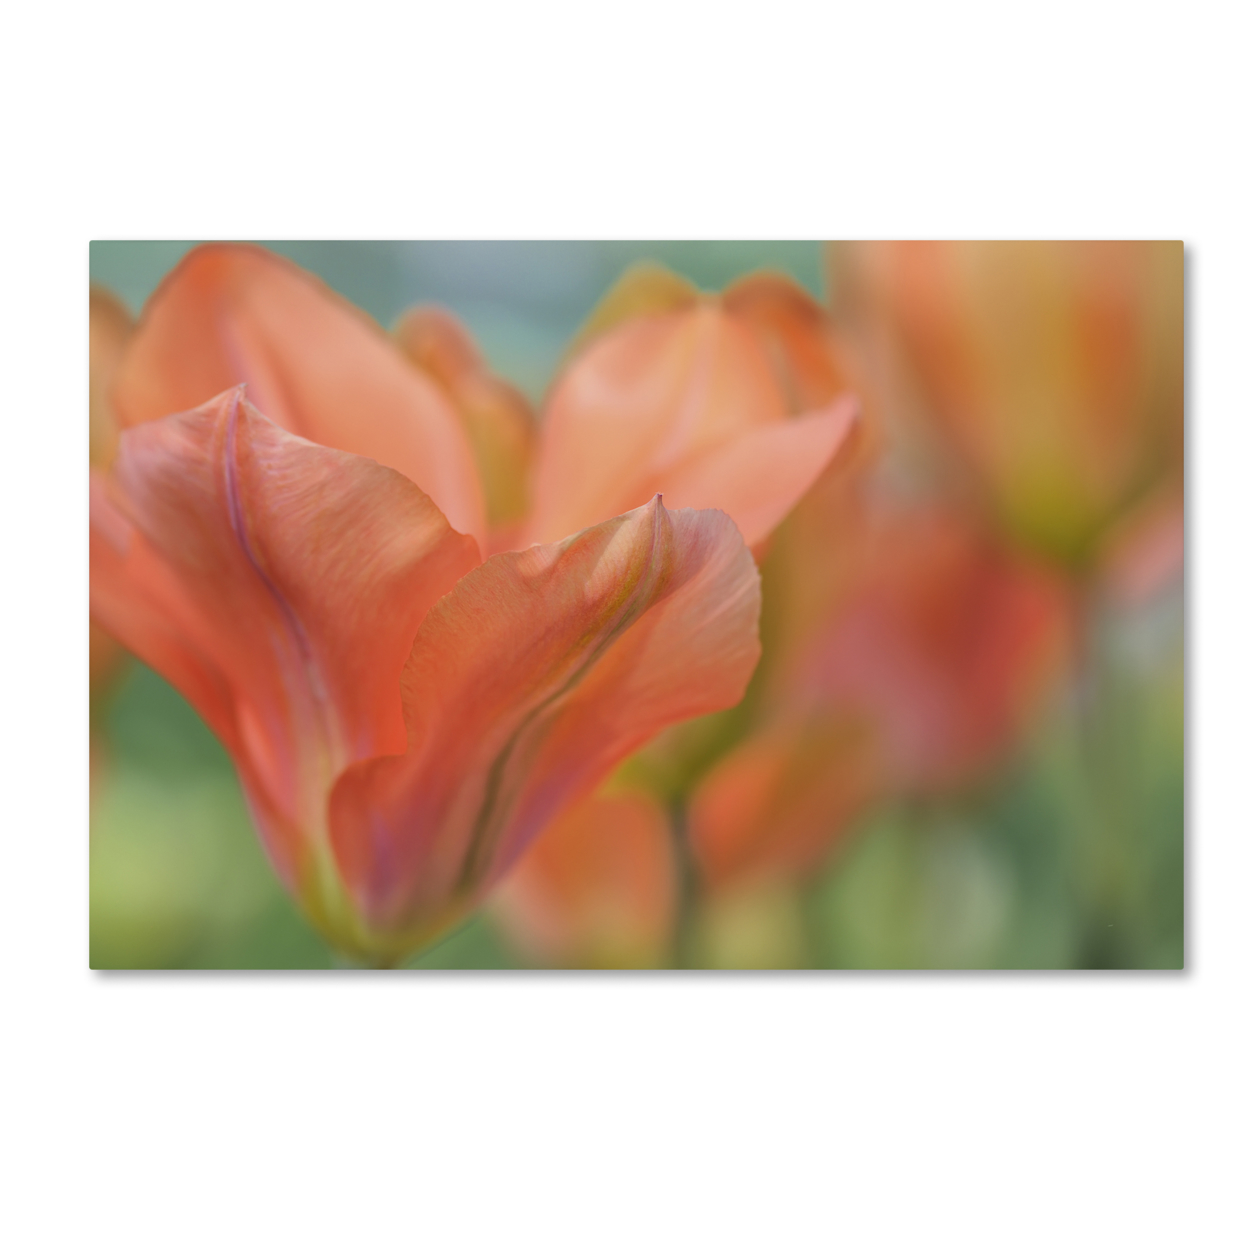 Cora Niele 'Orange Wings Tulips' Canvas Art 16 X 24